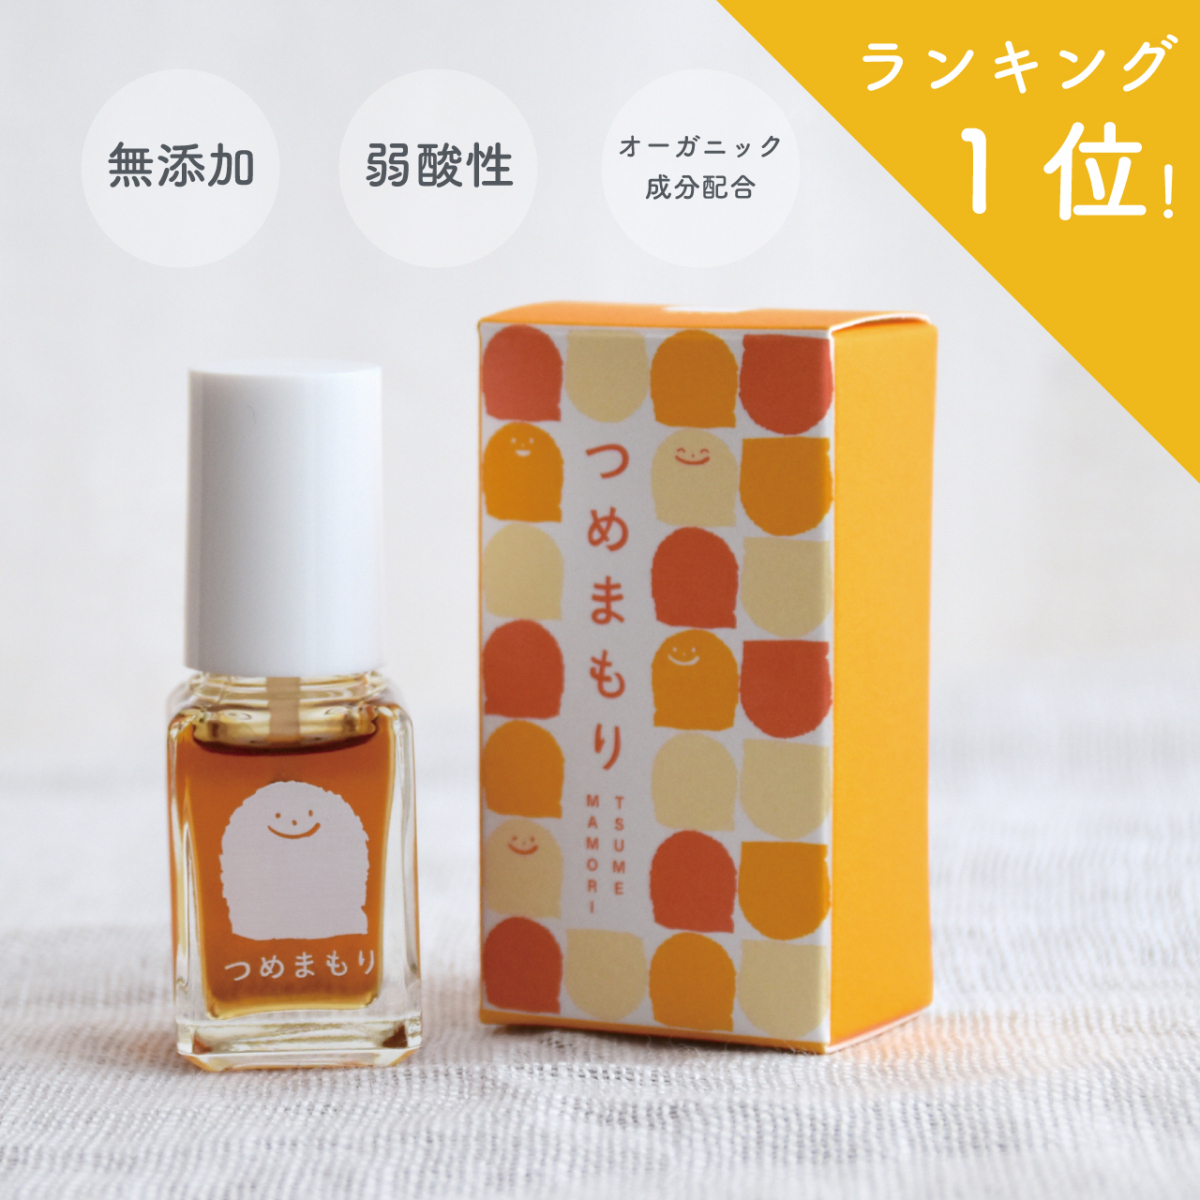  nail biting finger .... prevention .. manicure speed . type child goods finger .... make do organic no addition weak acid . made in Japan .....6ml